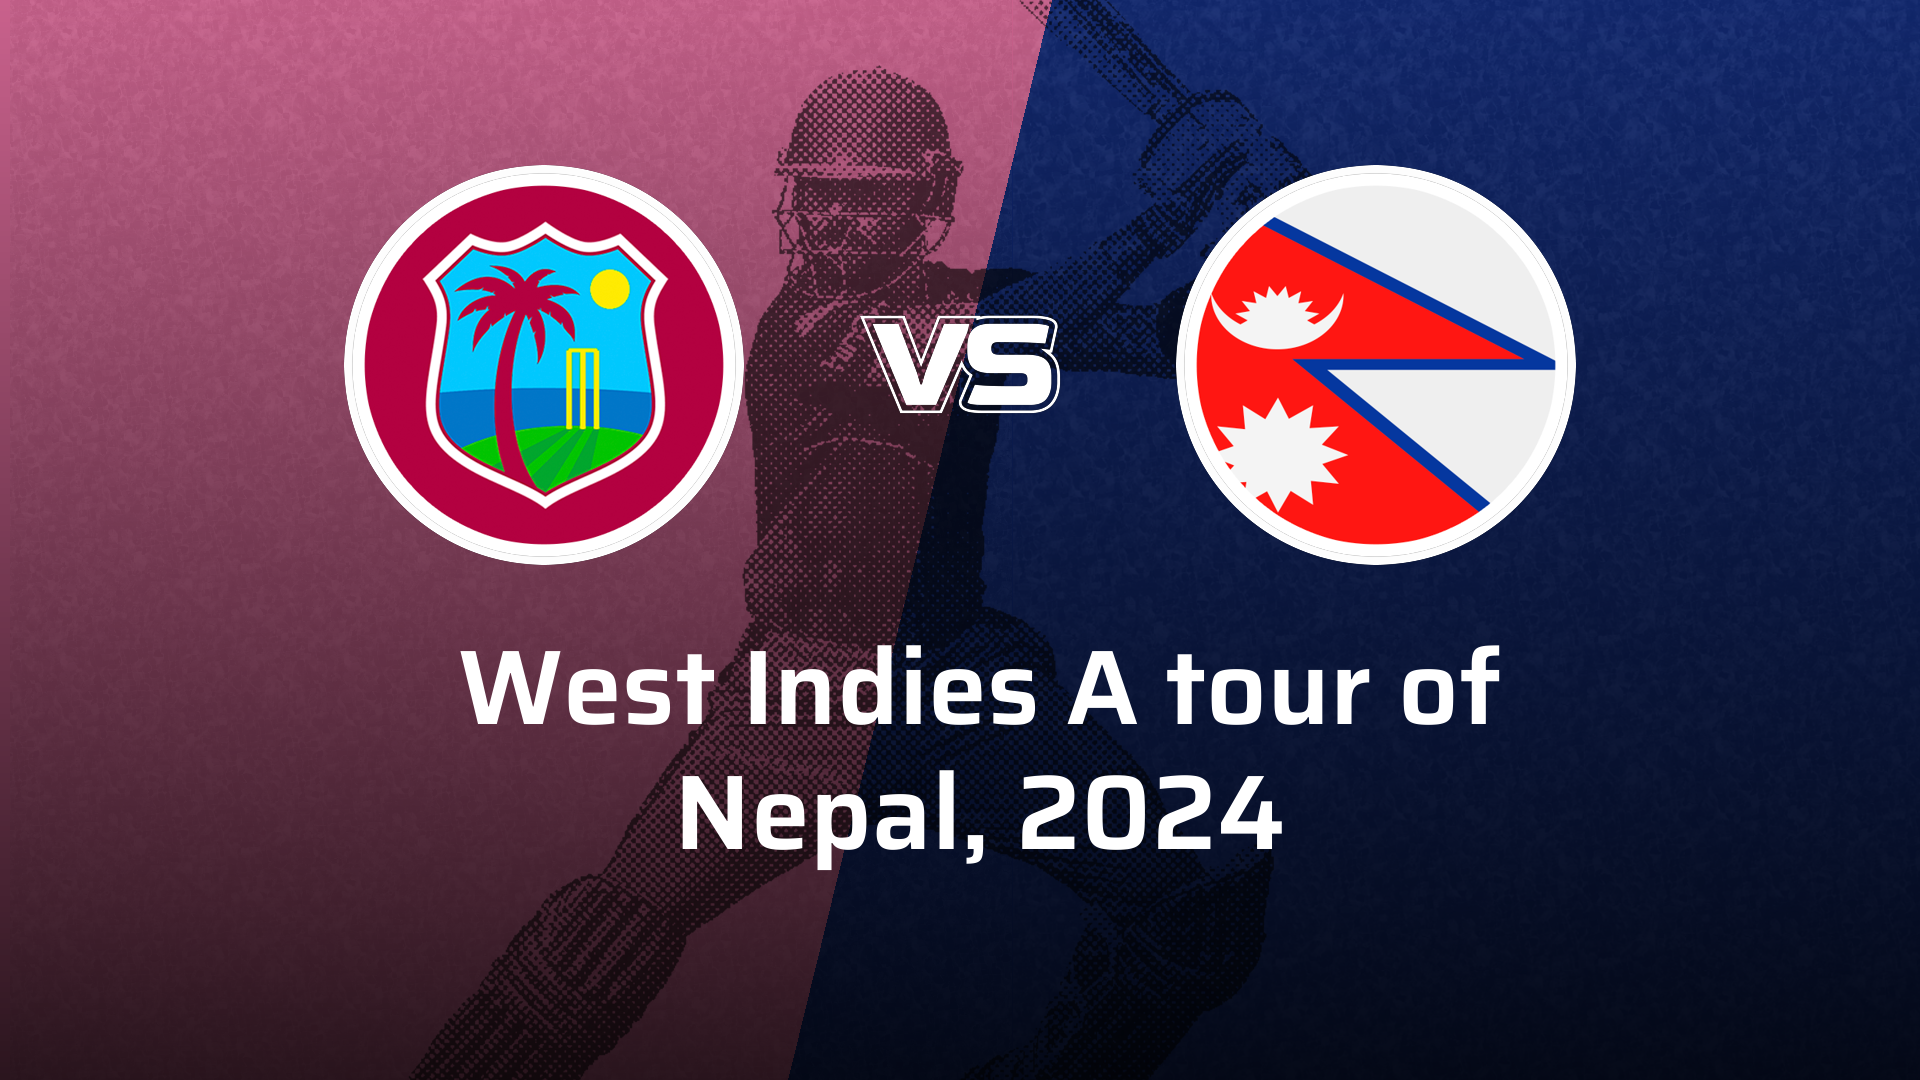 Nepal VS West Indies A